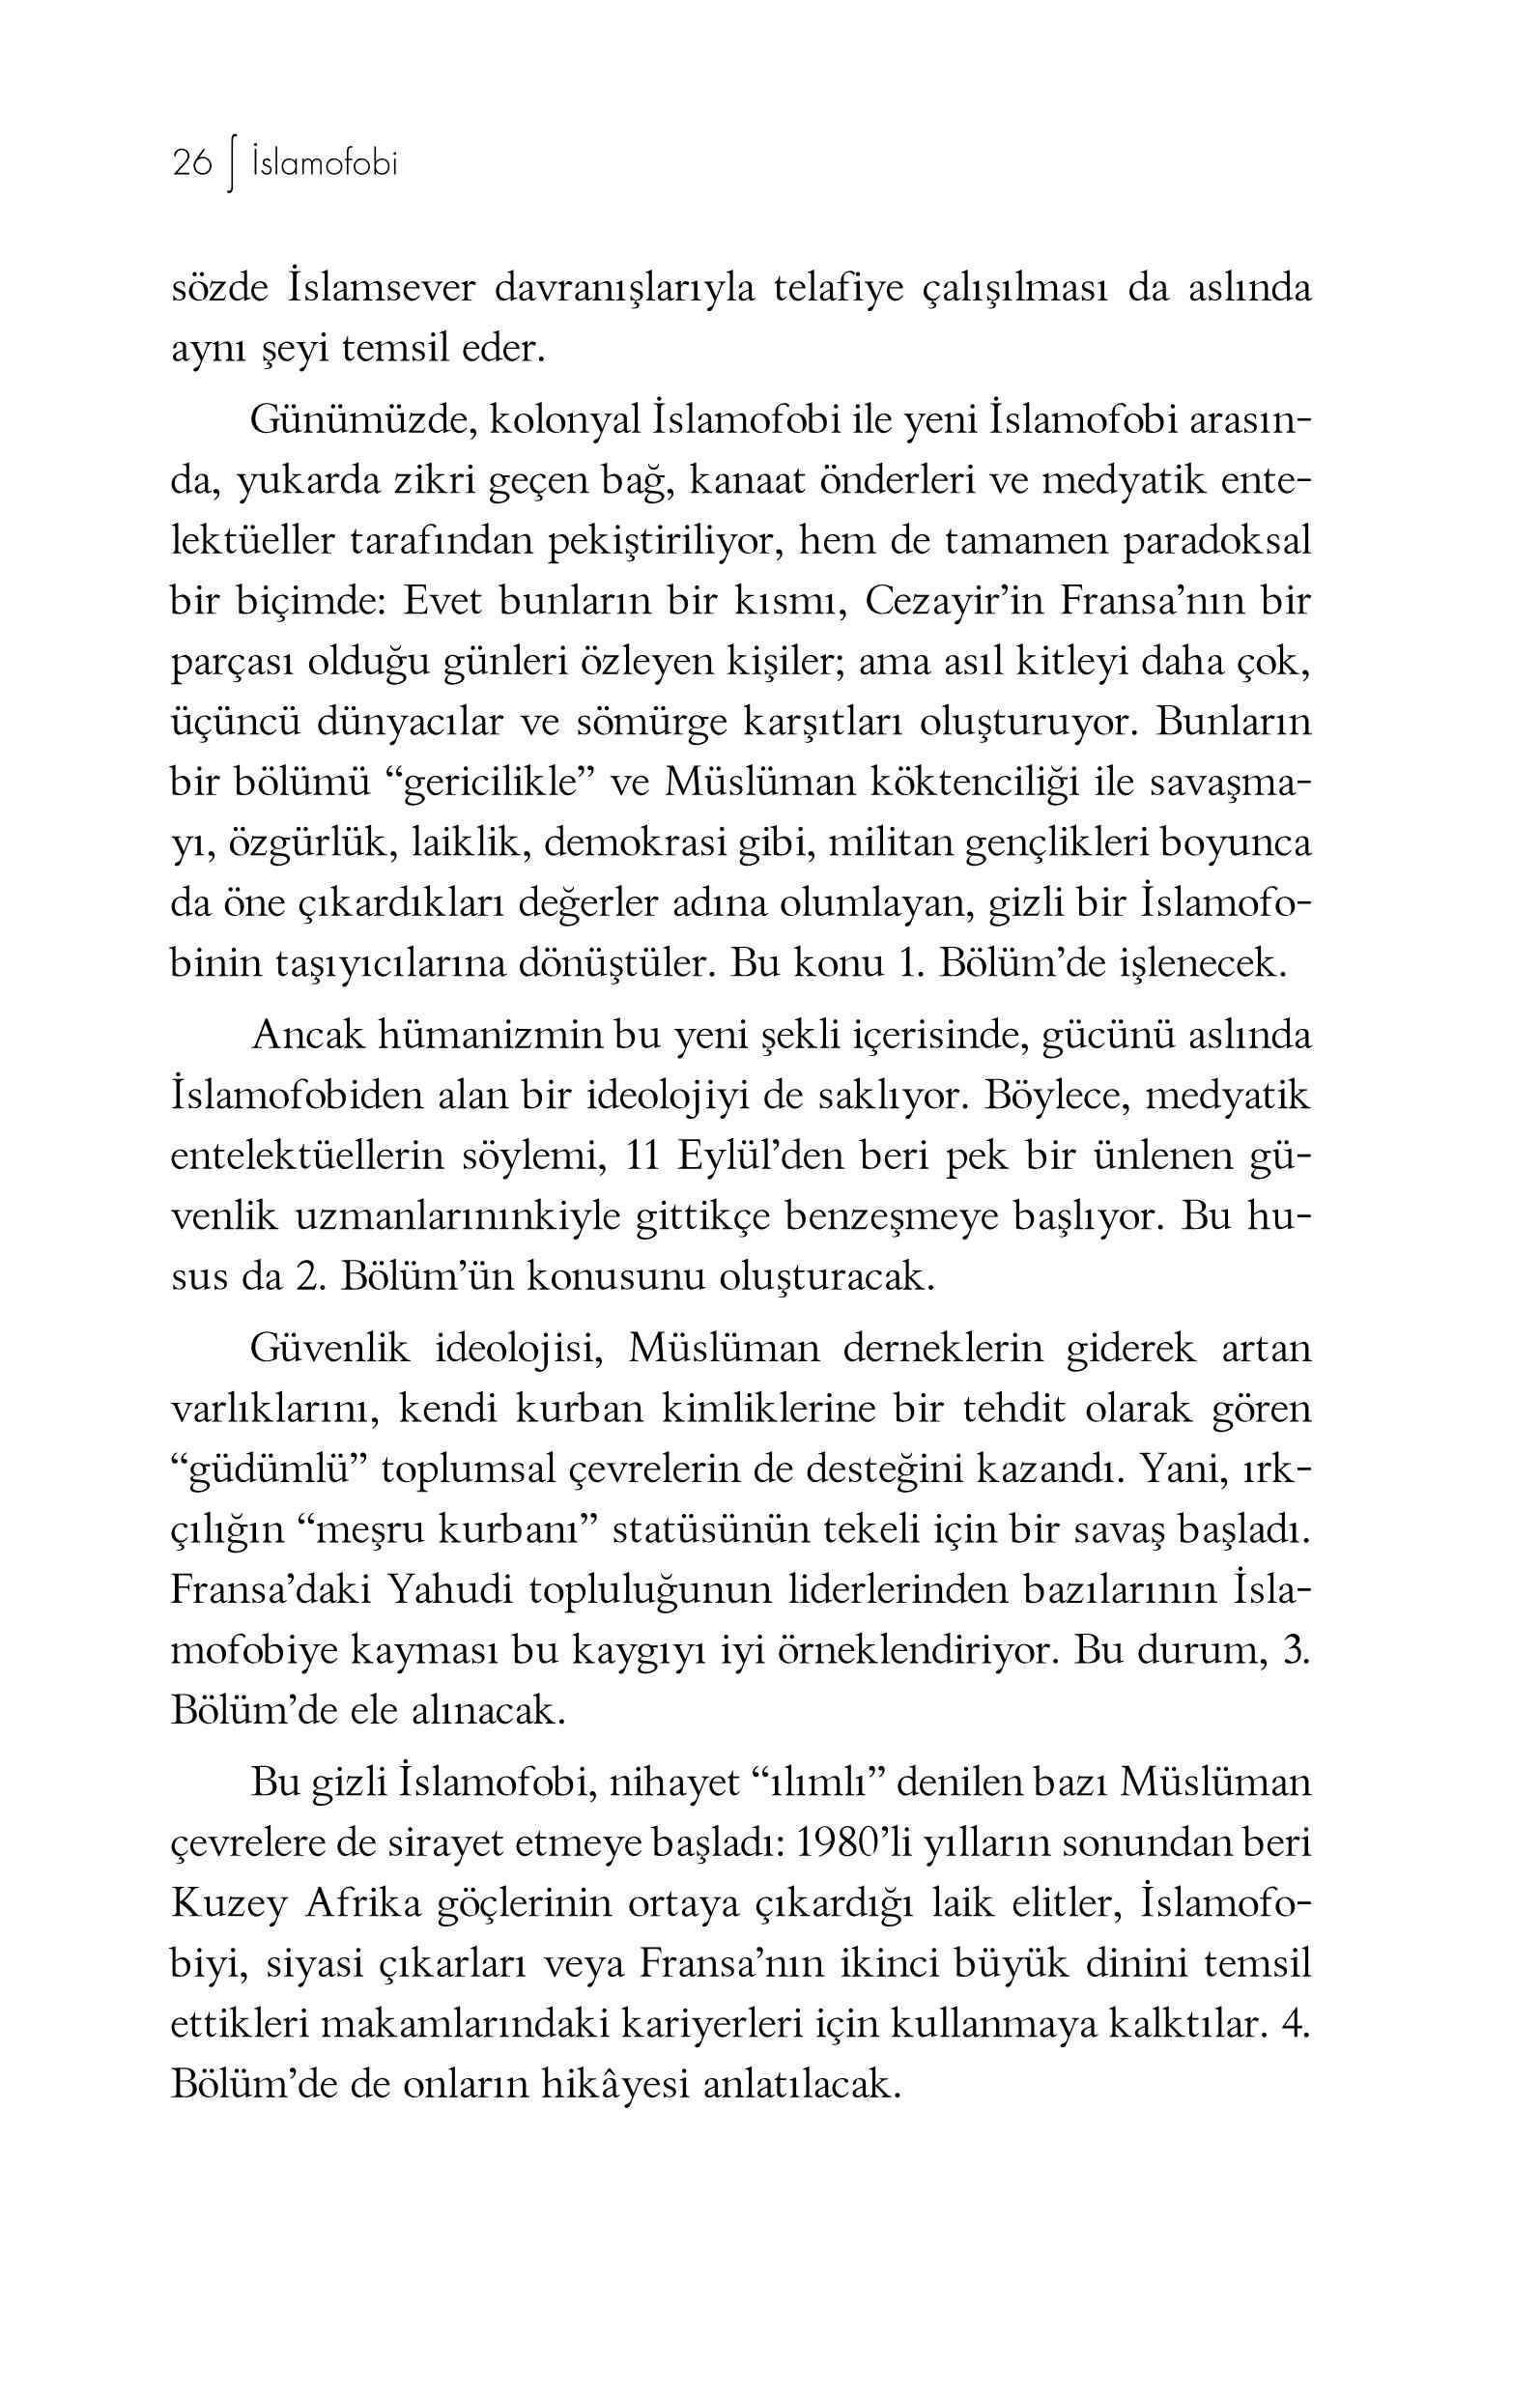 Kuresel Dunyada islam-1 -Vincent Geisser - islamofobi - UfukYayinlari.pdf, 134-Sayfa 